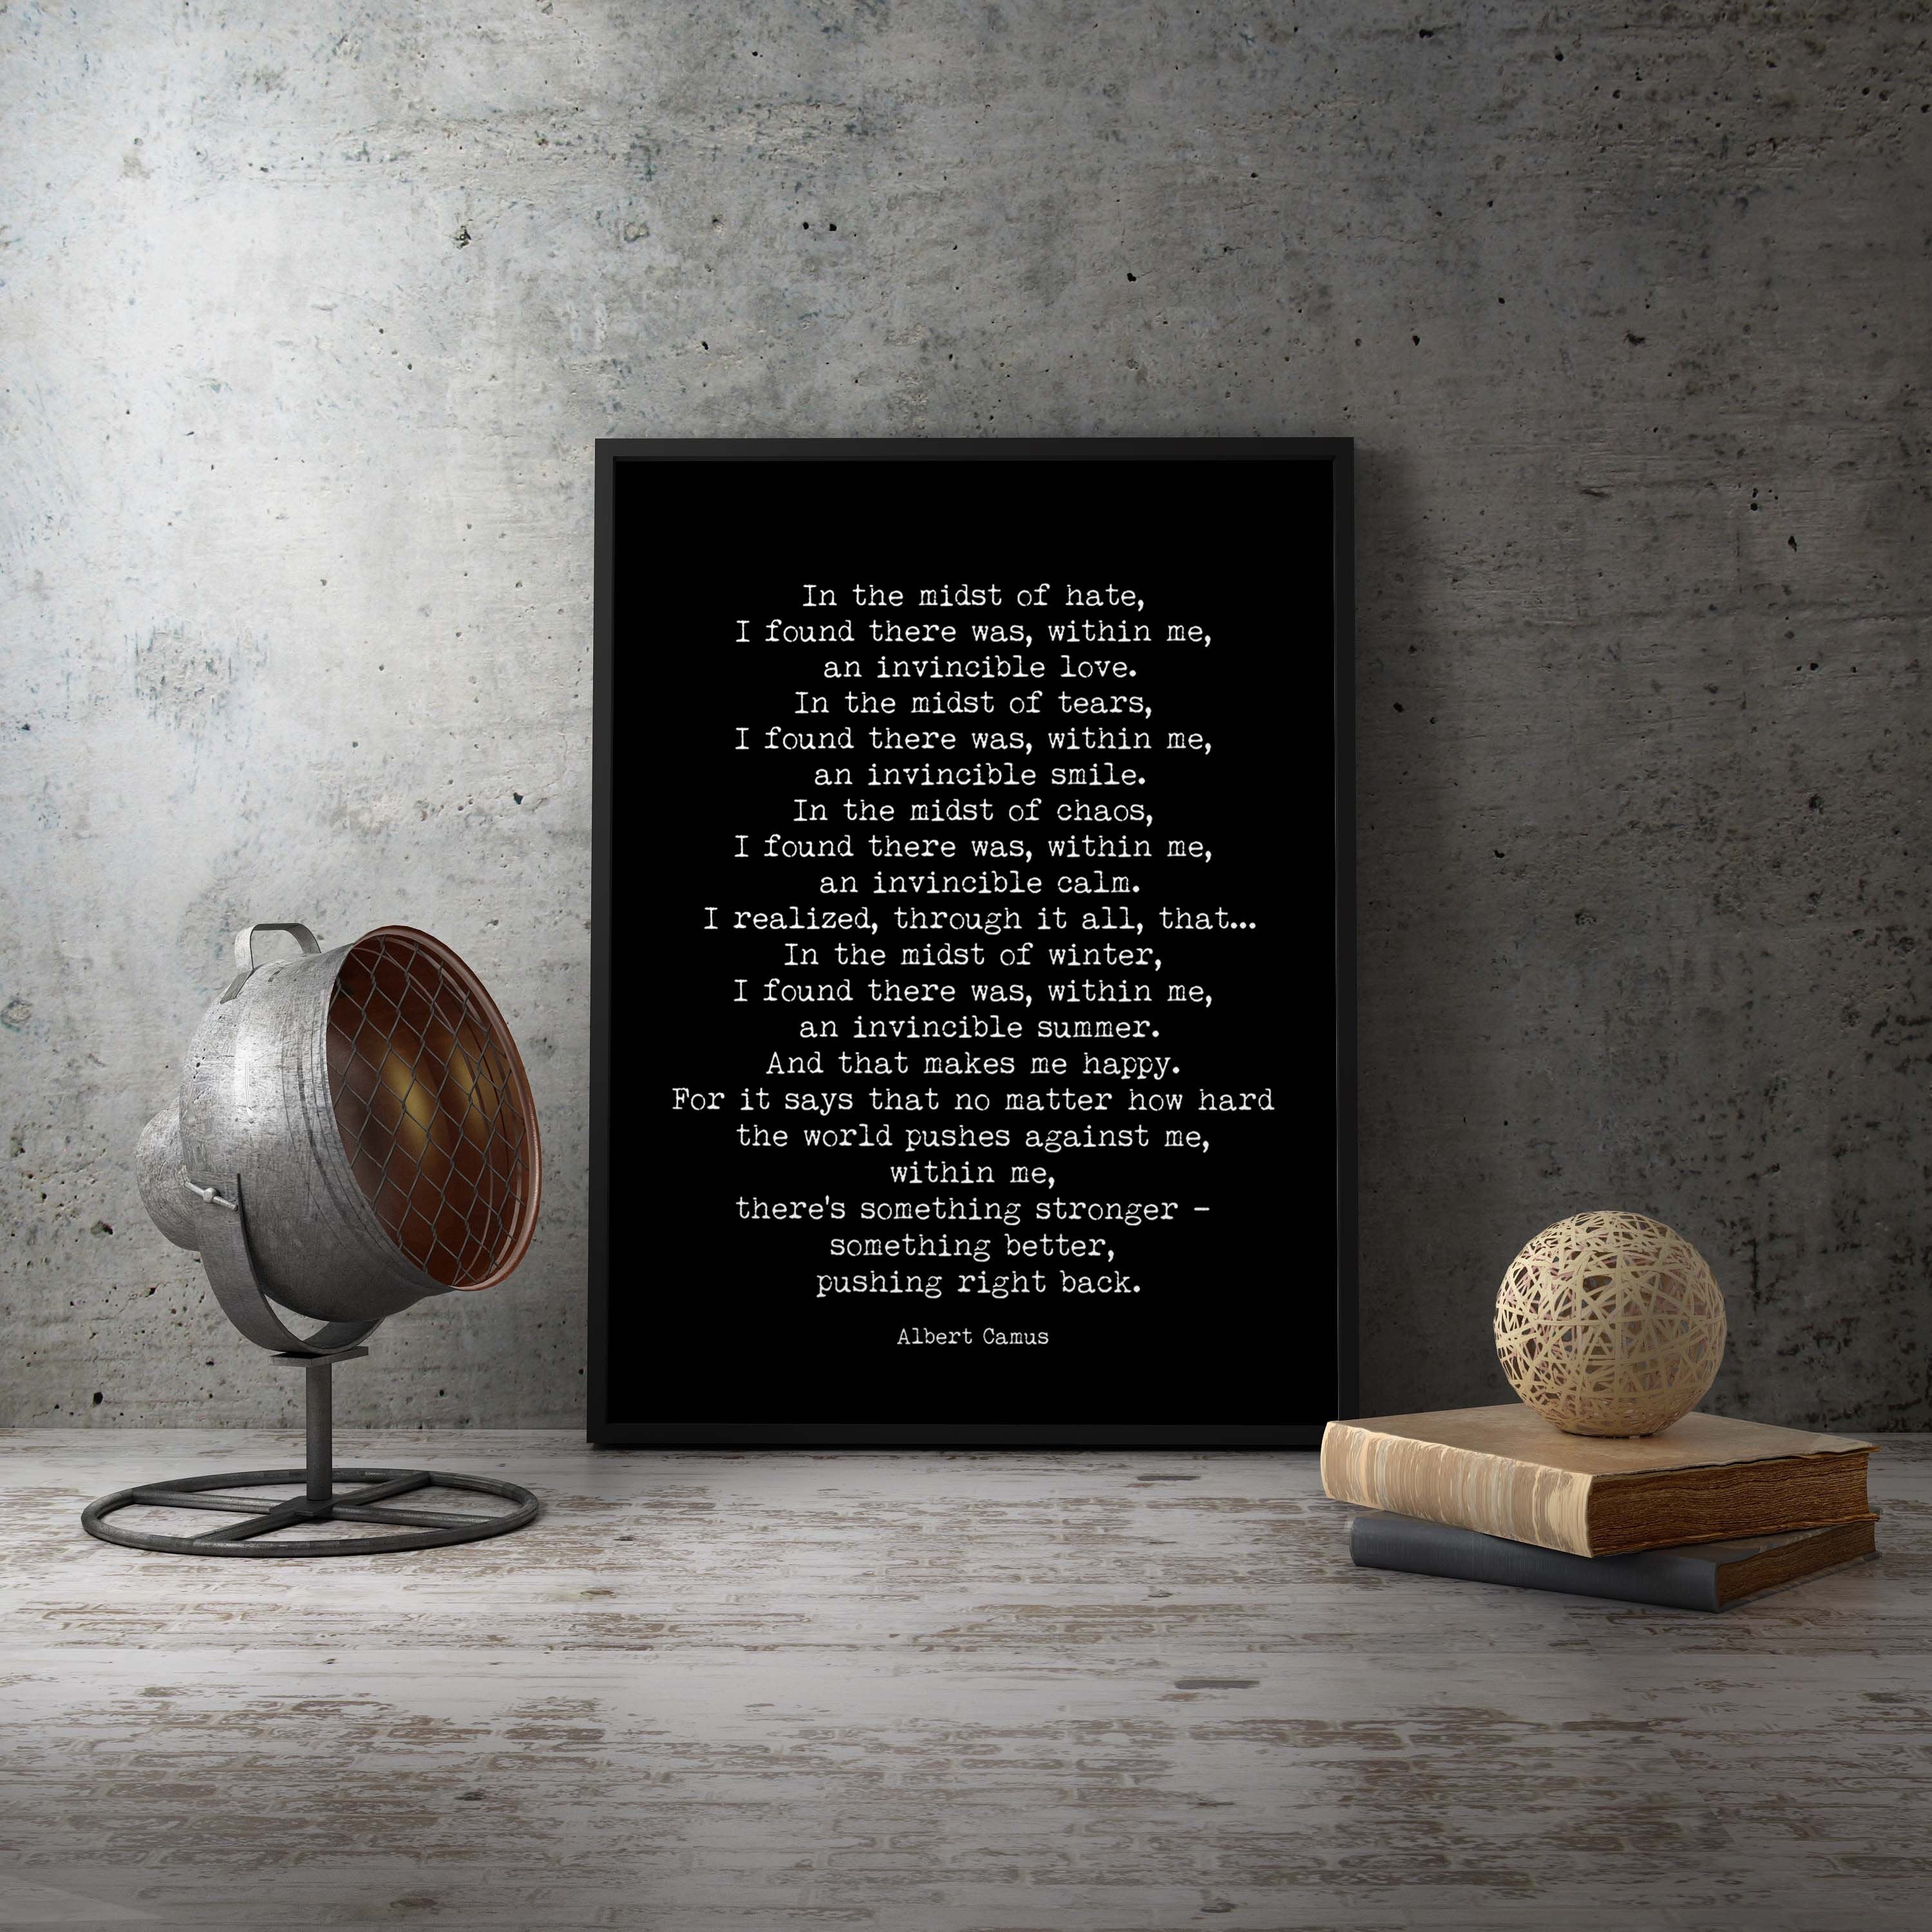 Invincible Summer FRAMED Wall Art Albert Camus Quote, Framed Art Poster Motivational Print Black & White Home Decor